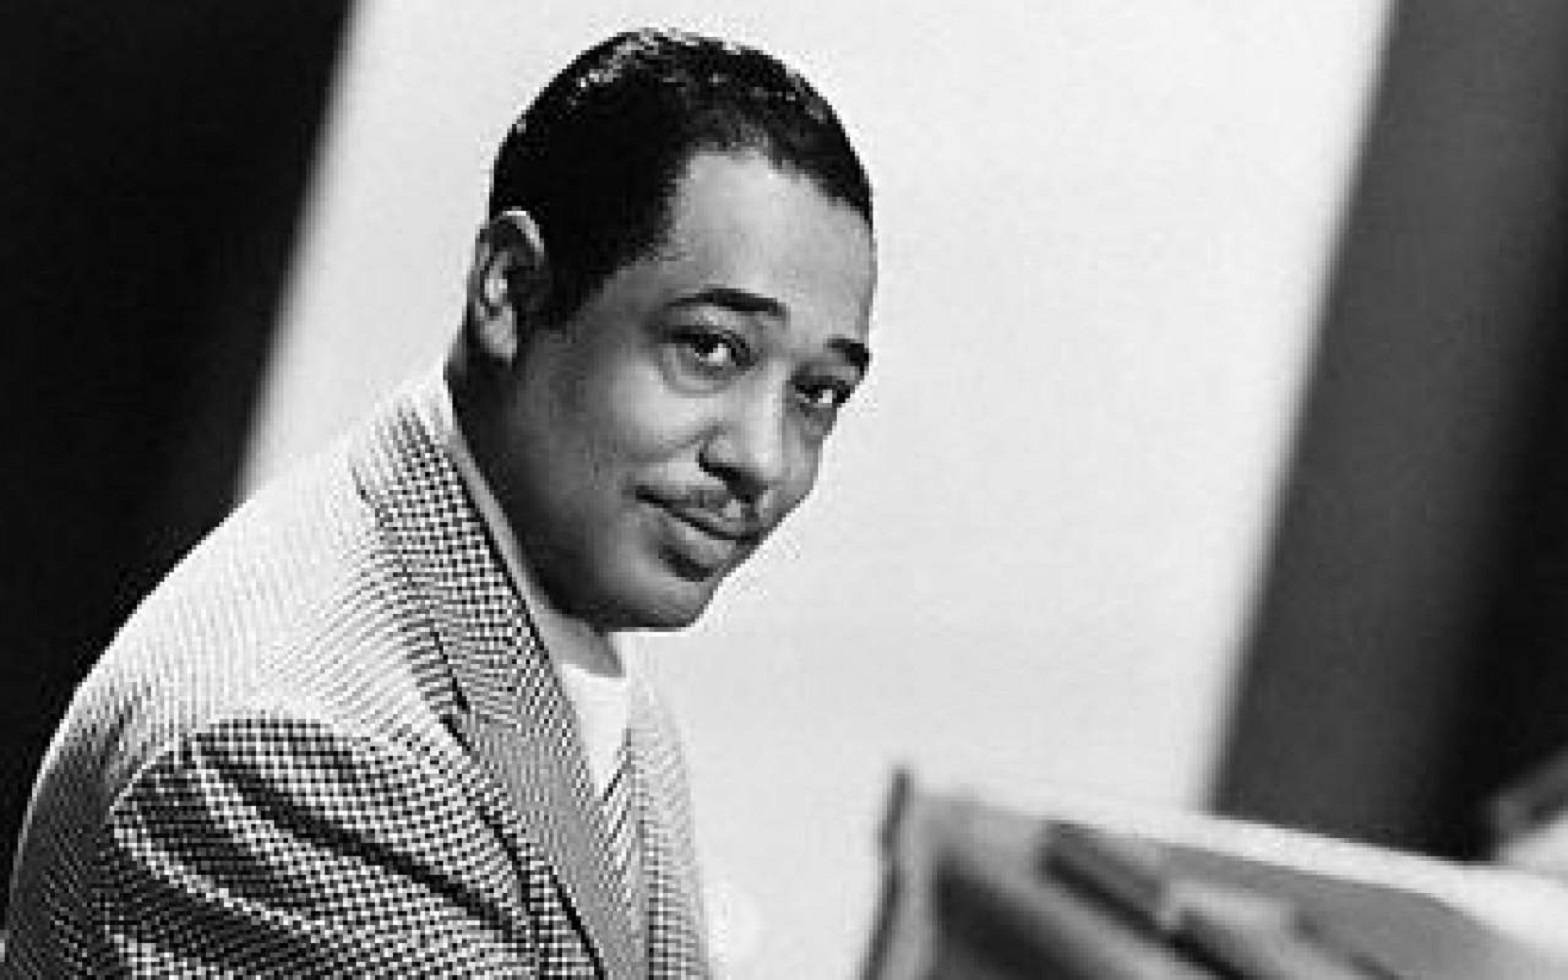 Compositoramericano Duke Ellington, Clássica Foto De Retrato. Papel de Parede